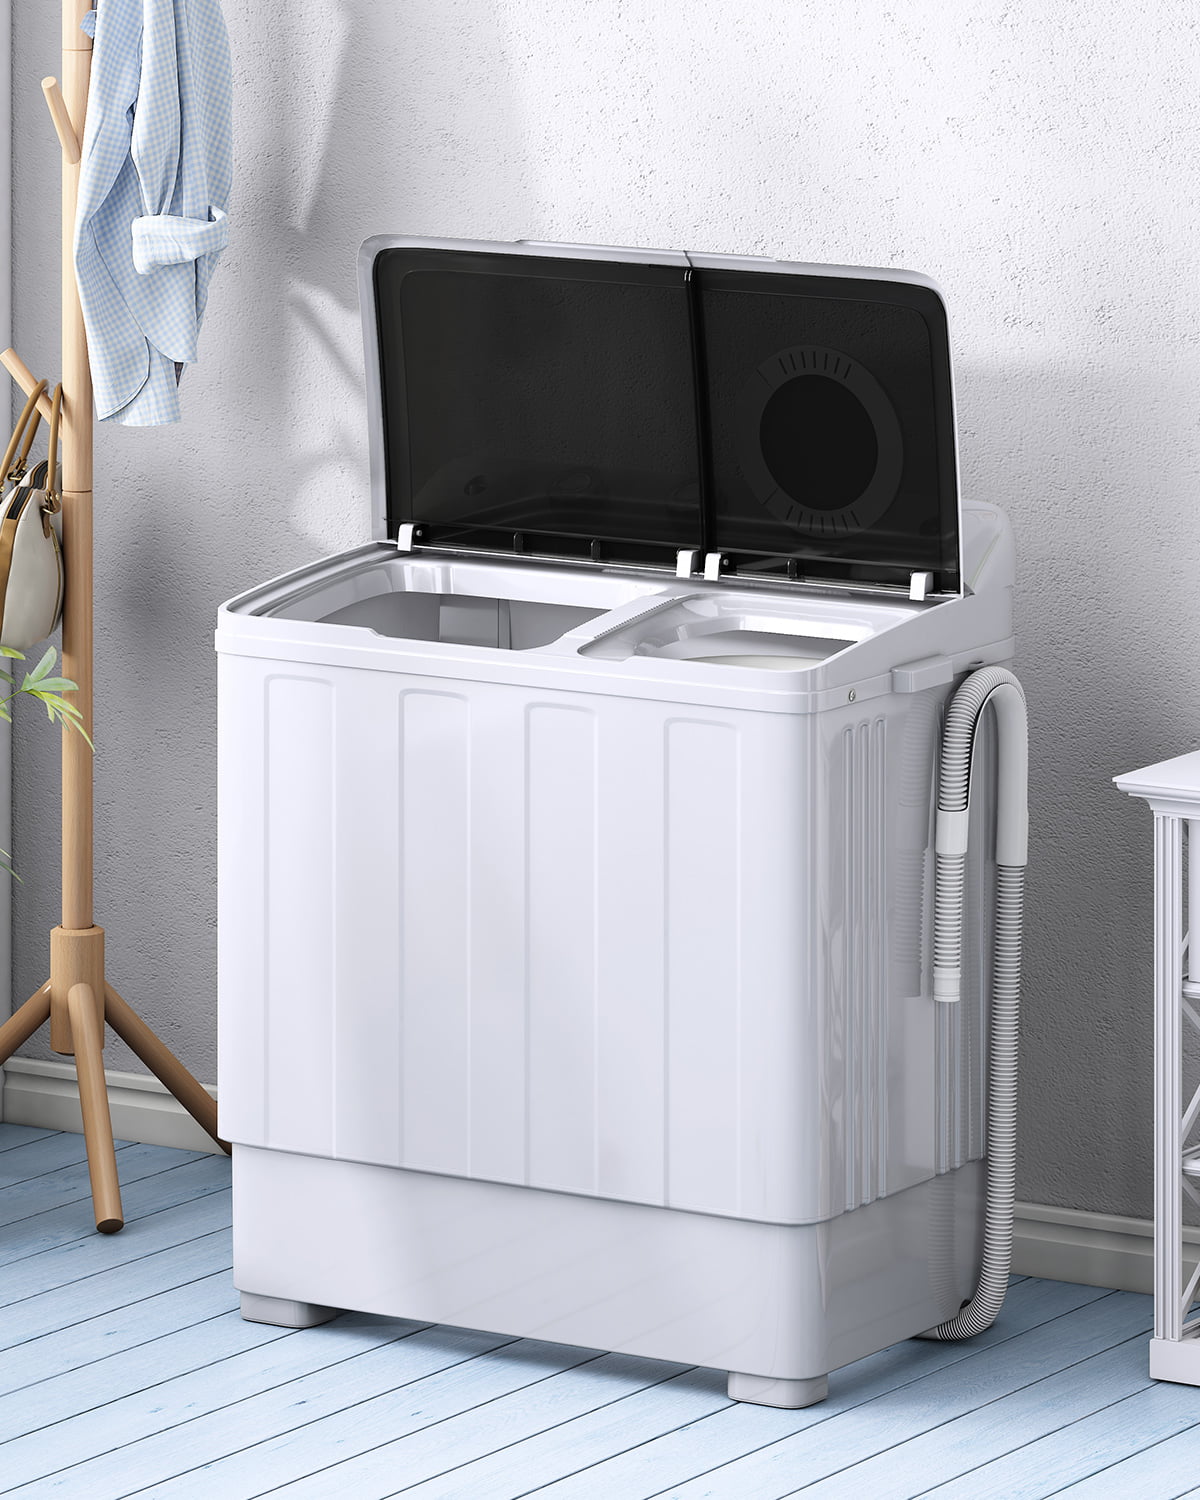  TABU 28lbs Portable Washing Machine with Drain Pump